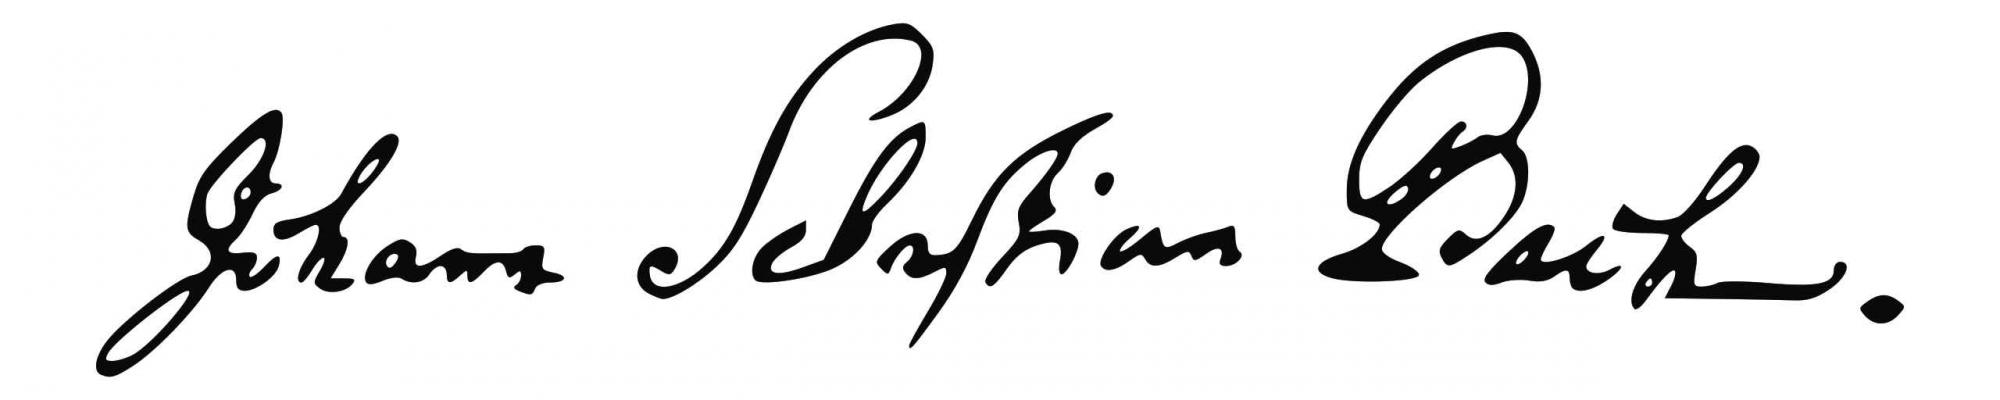 J. S. Bach's signature